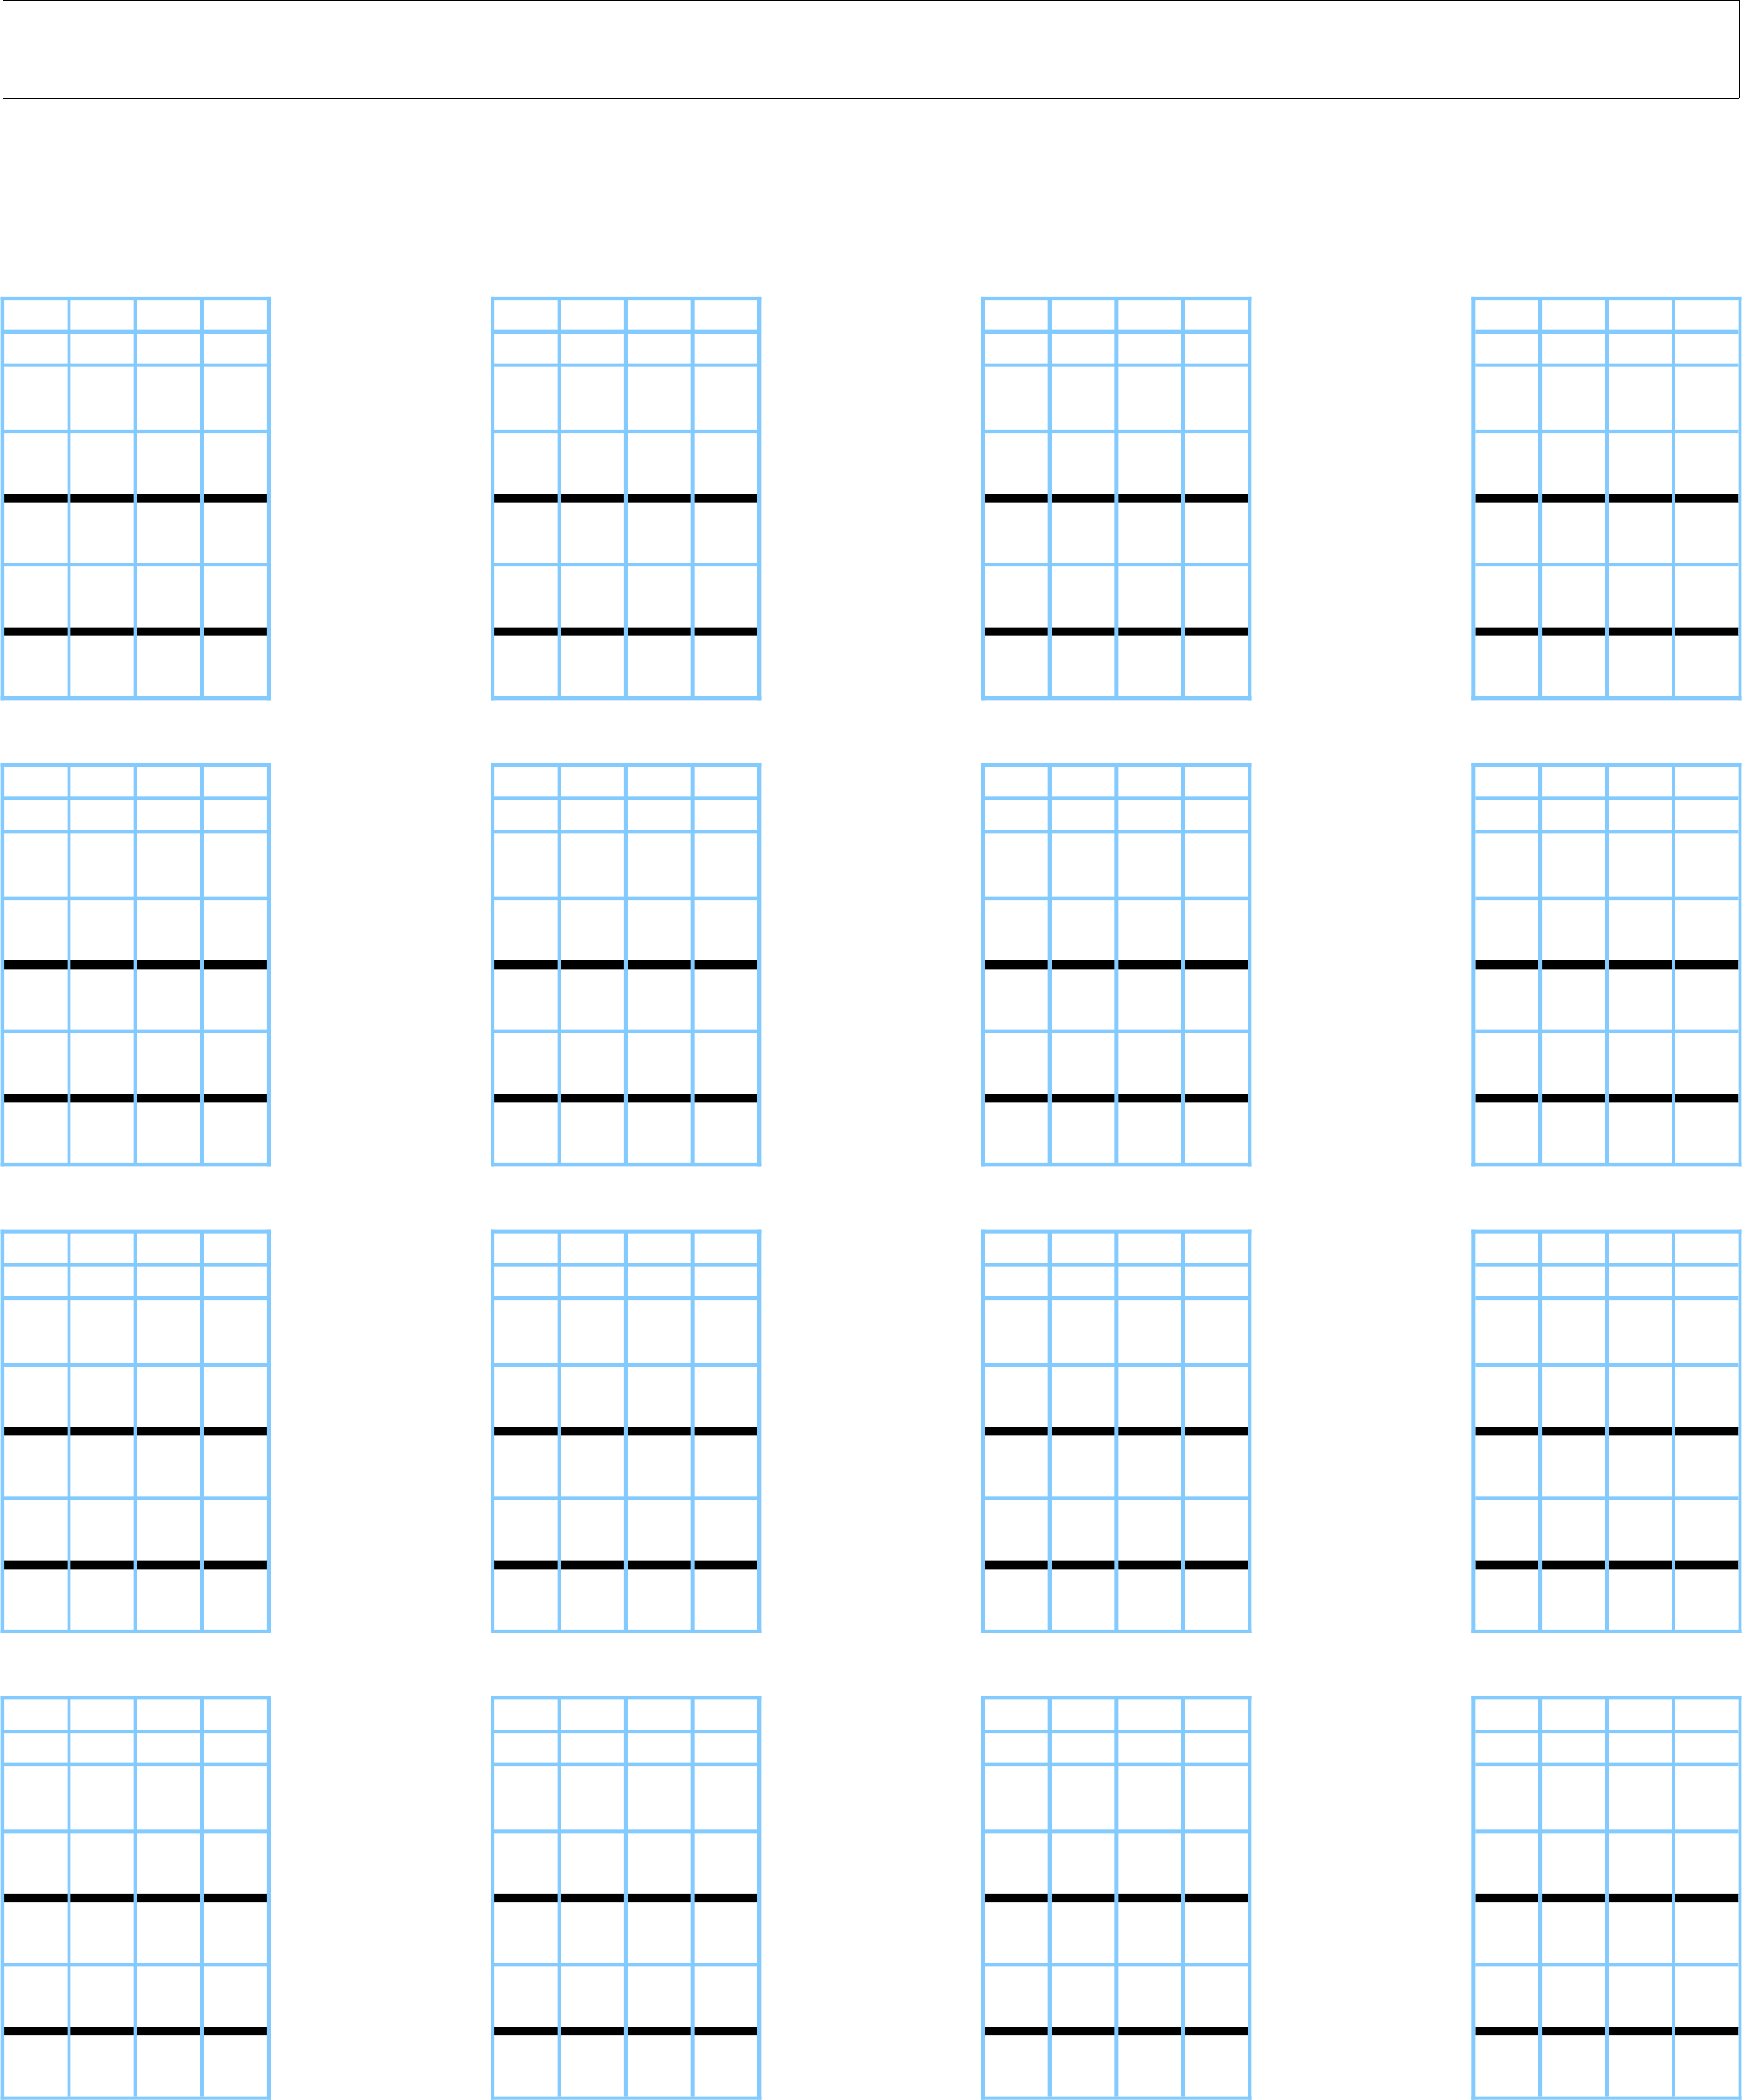  Multiplication Worksheets On Graph Paper PrintableMultiplication